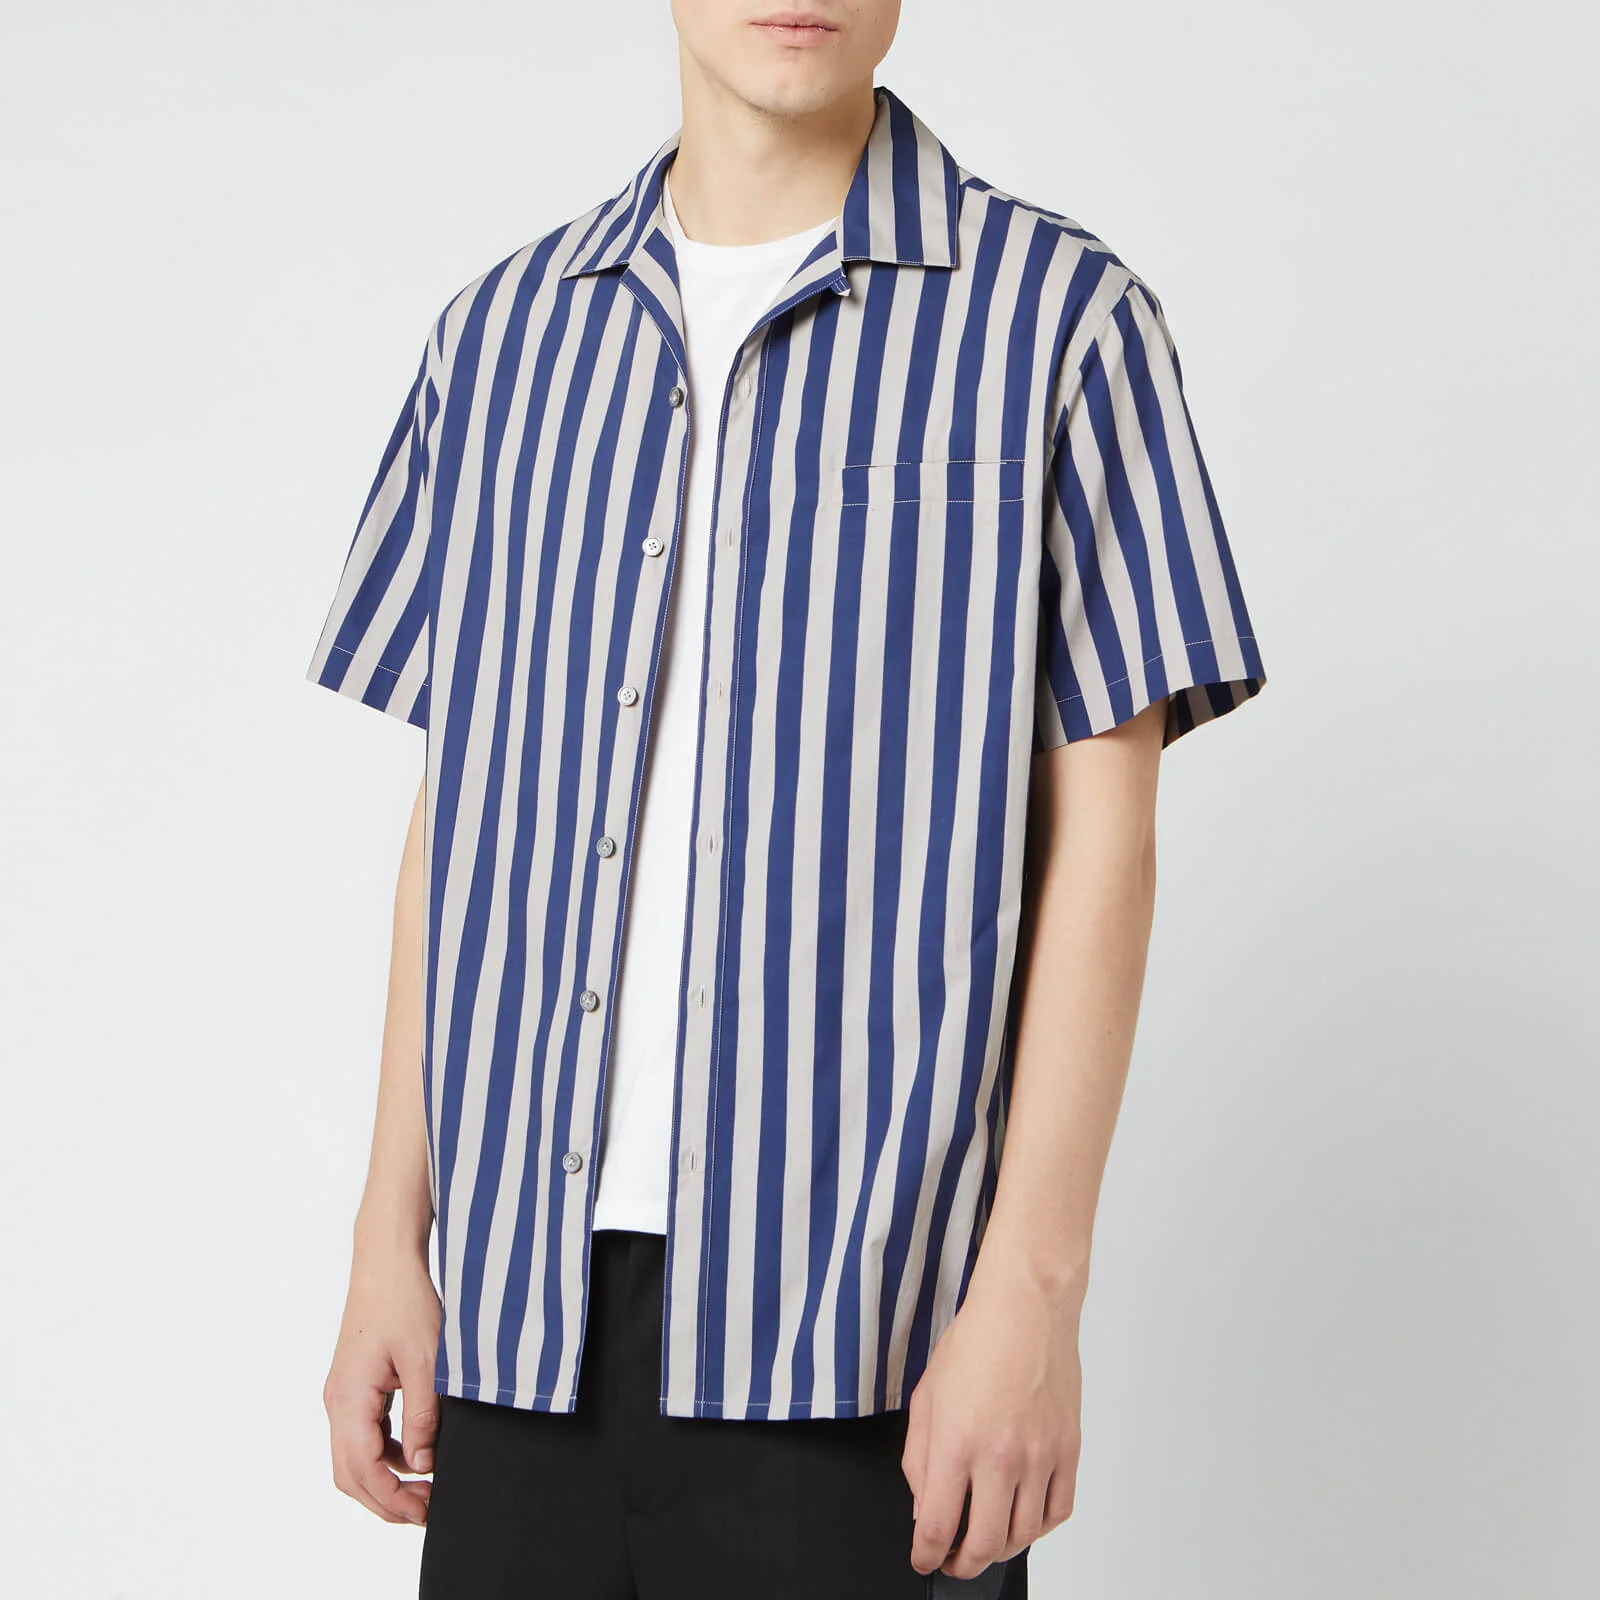 Lanvin Men's Striped Bowling Shirt - Dark Blue/Light Grey Image 1